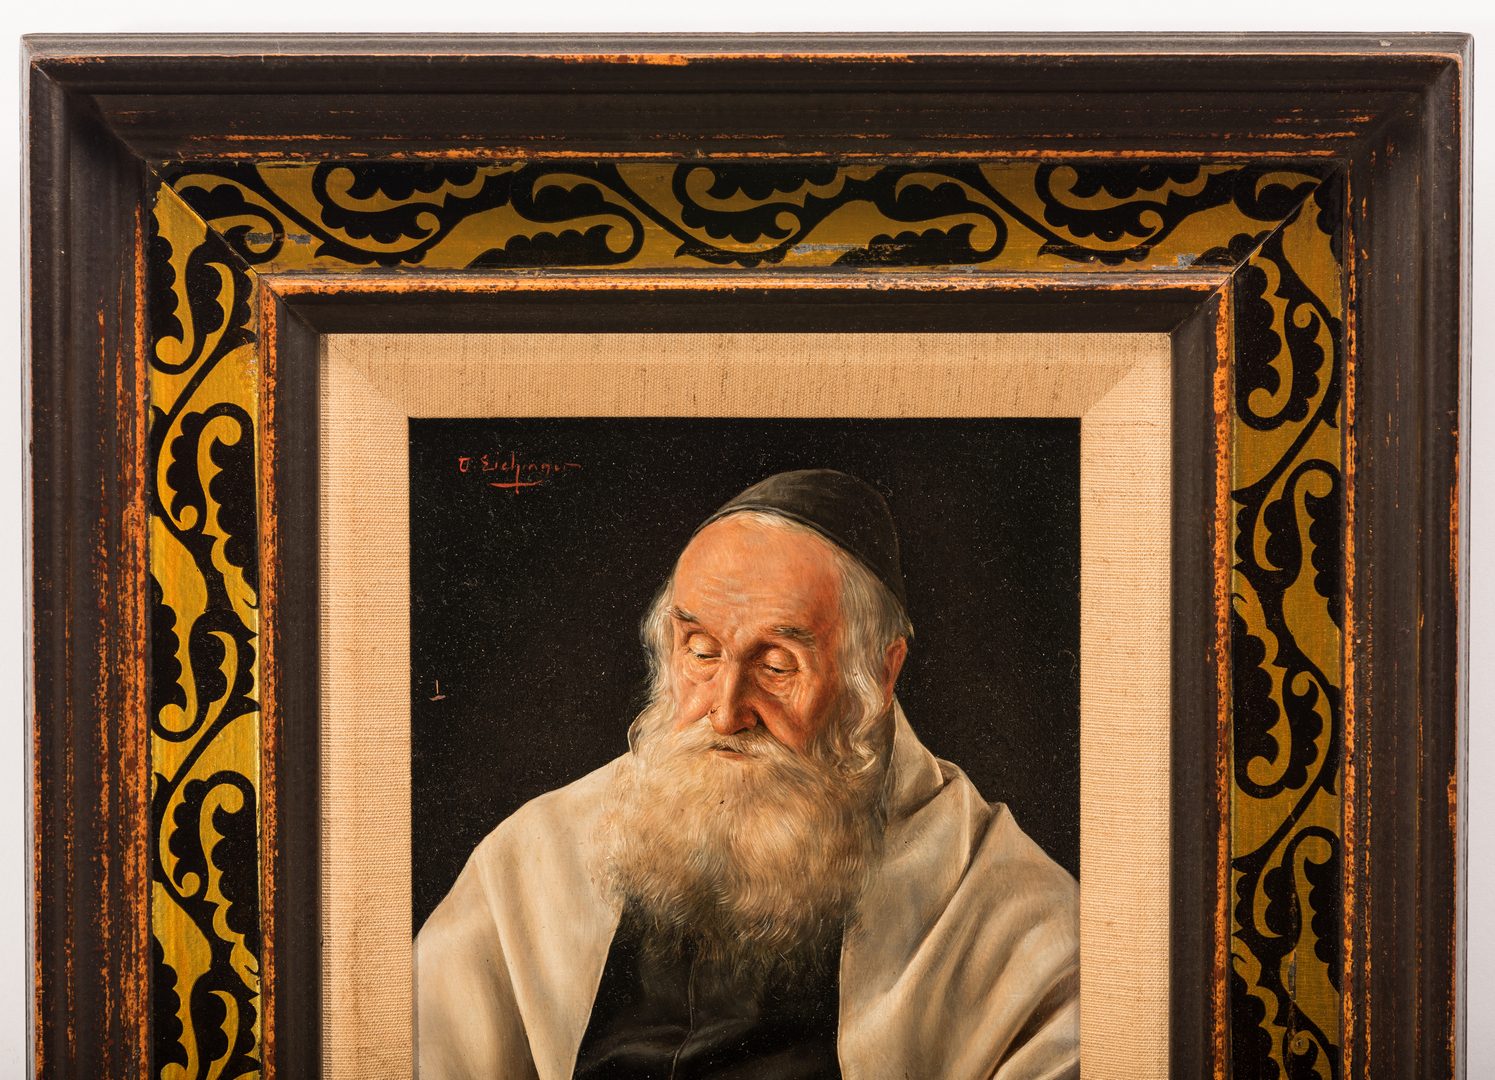 Lot 814: Otto Eichinger, O/B, Portrait of a Rabbi